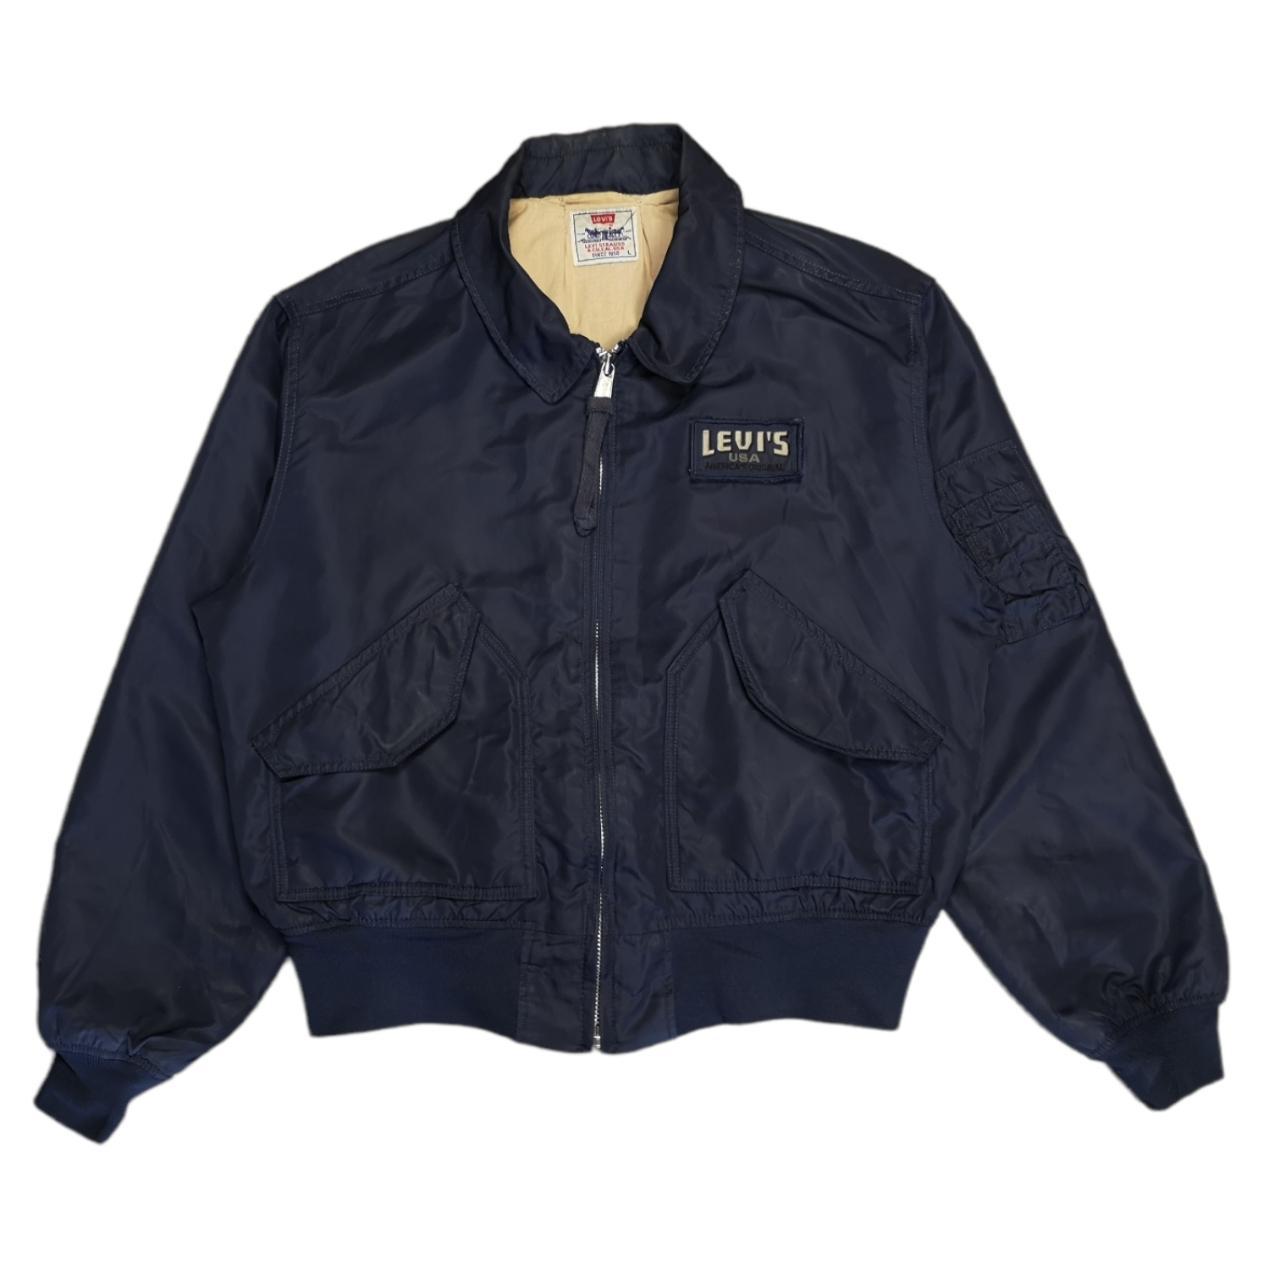 1995 Levi's Bomber Jacket Size XL (label states... - Depop